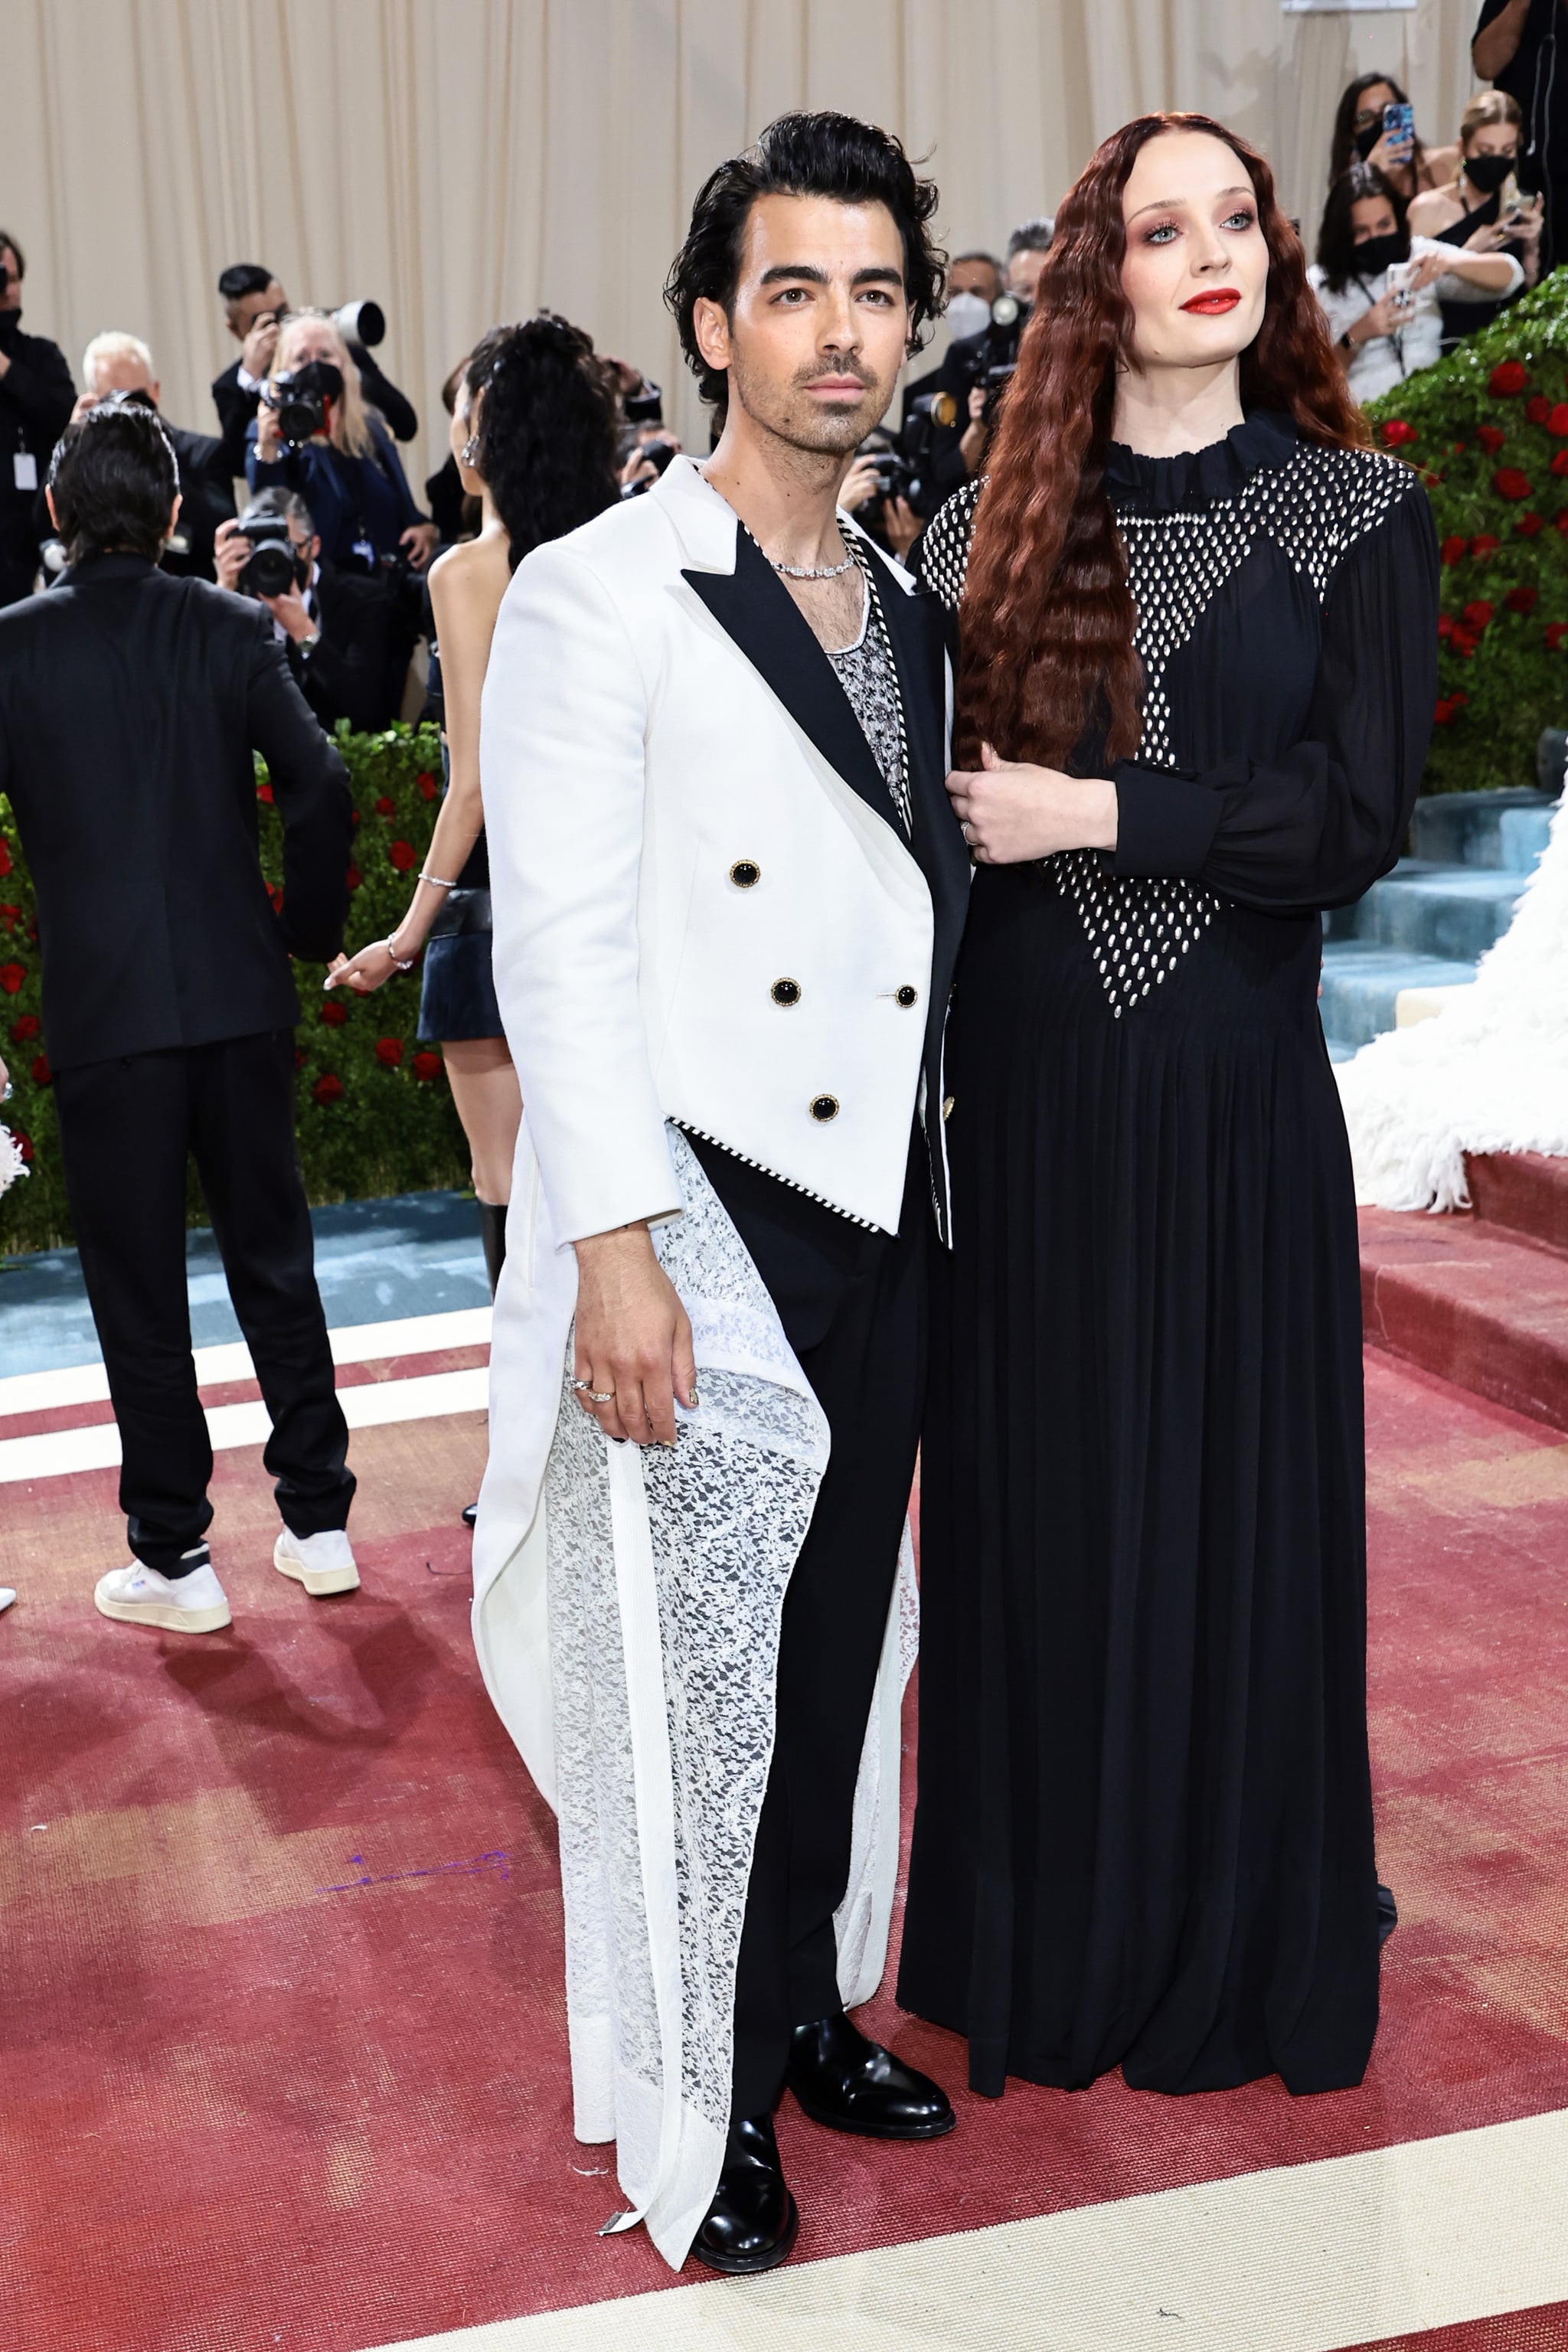 NEW YORK, NEW YORK - MAY 02: (L-R) Joe Jonas and Sophie Turner attend The 2022 Met Gala Celebrating